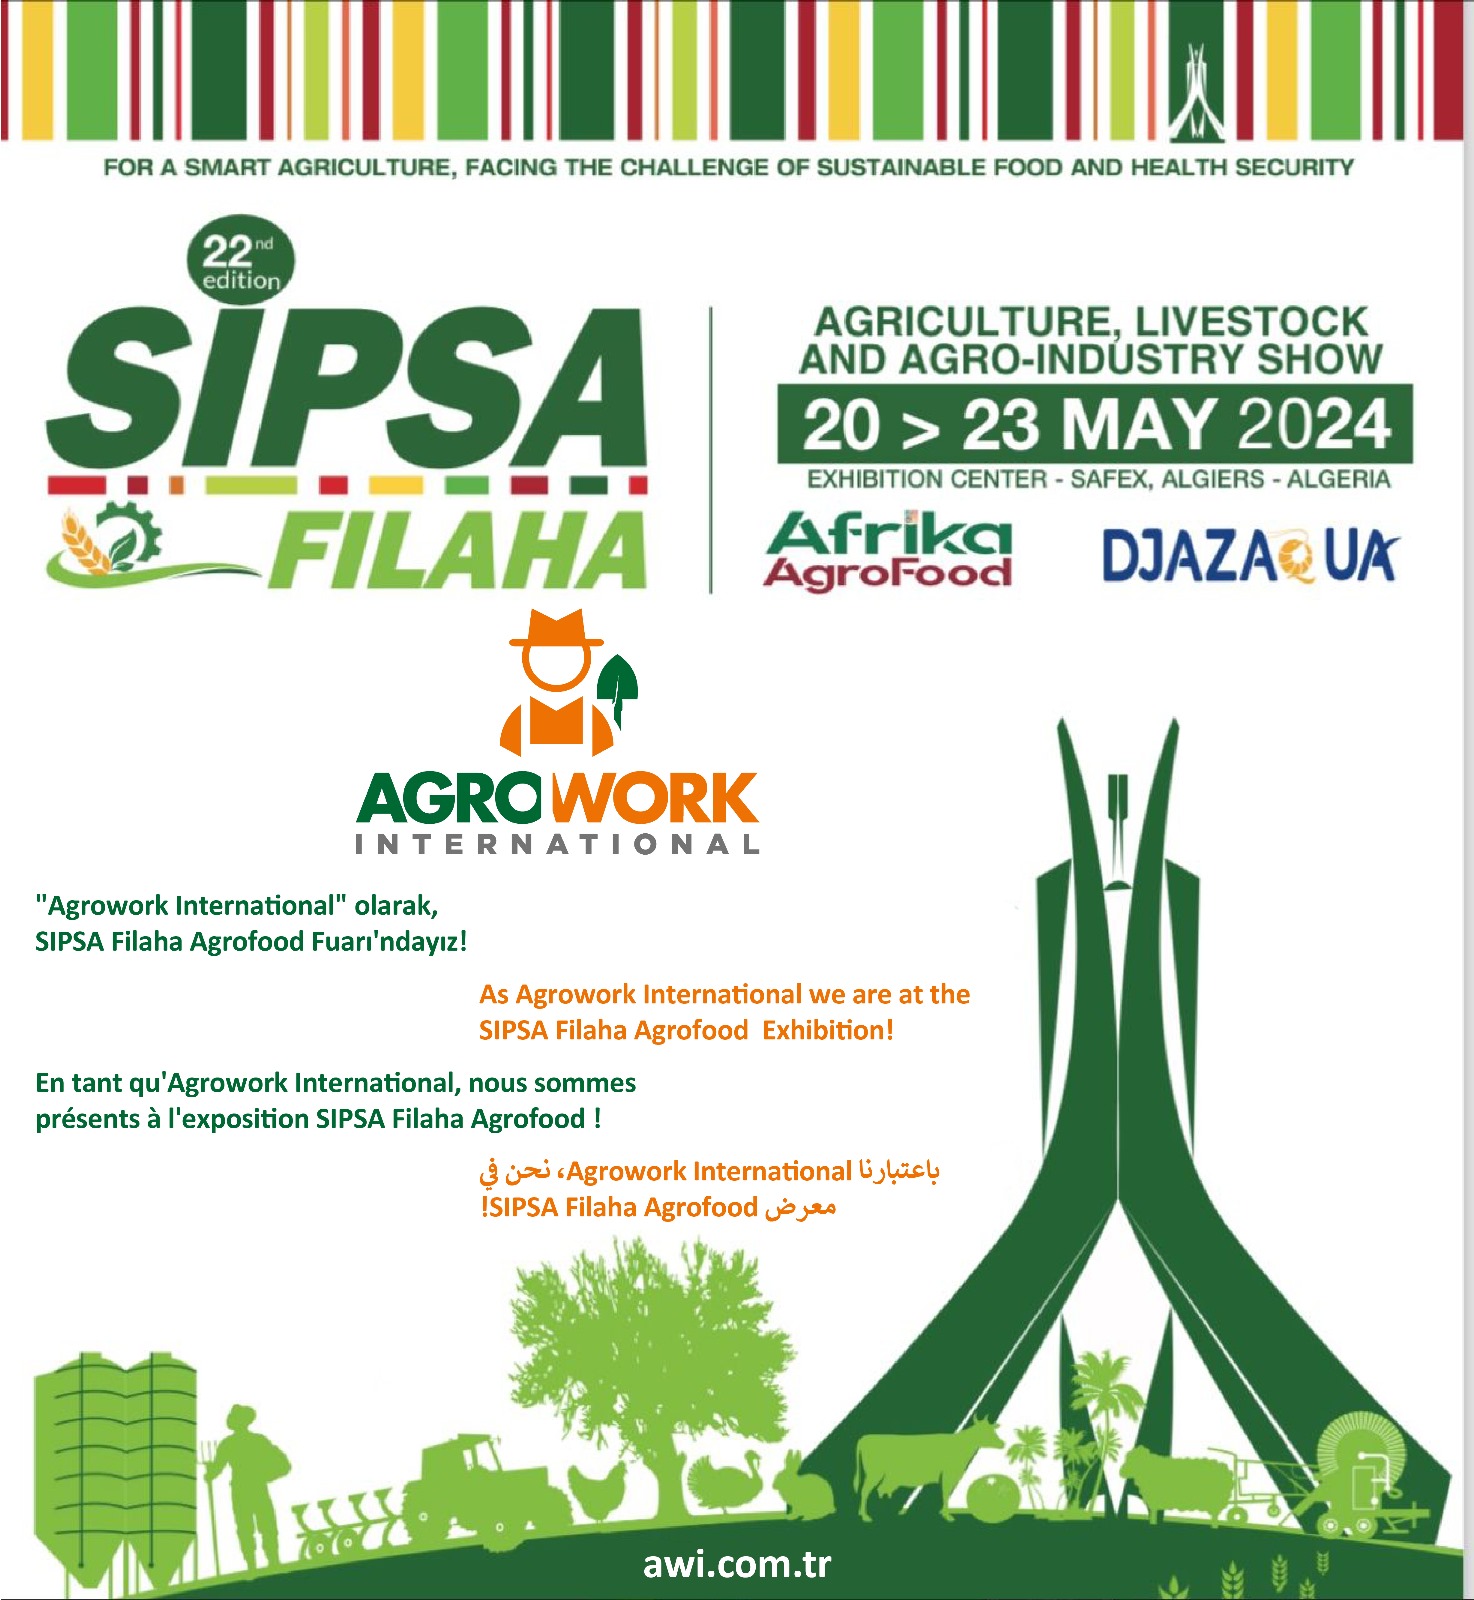 Agrowork International SIPSA FILAHA 2024